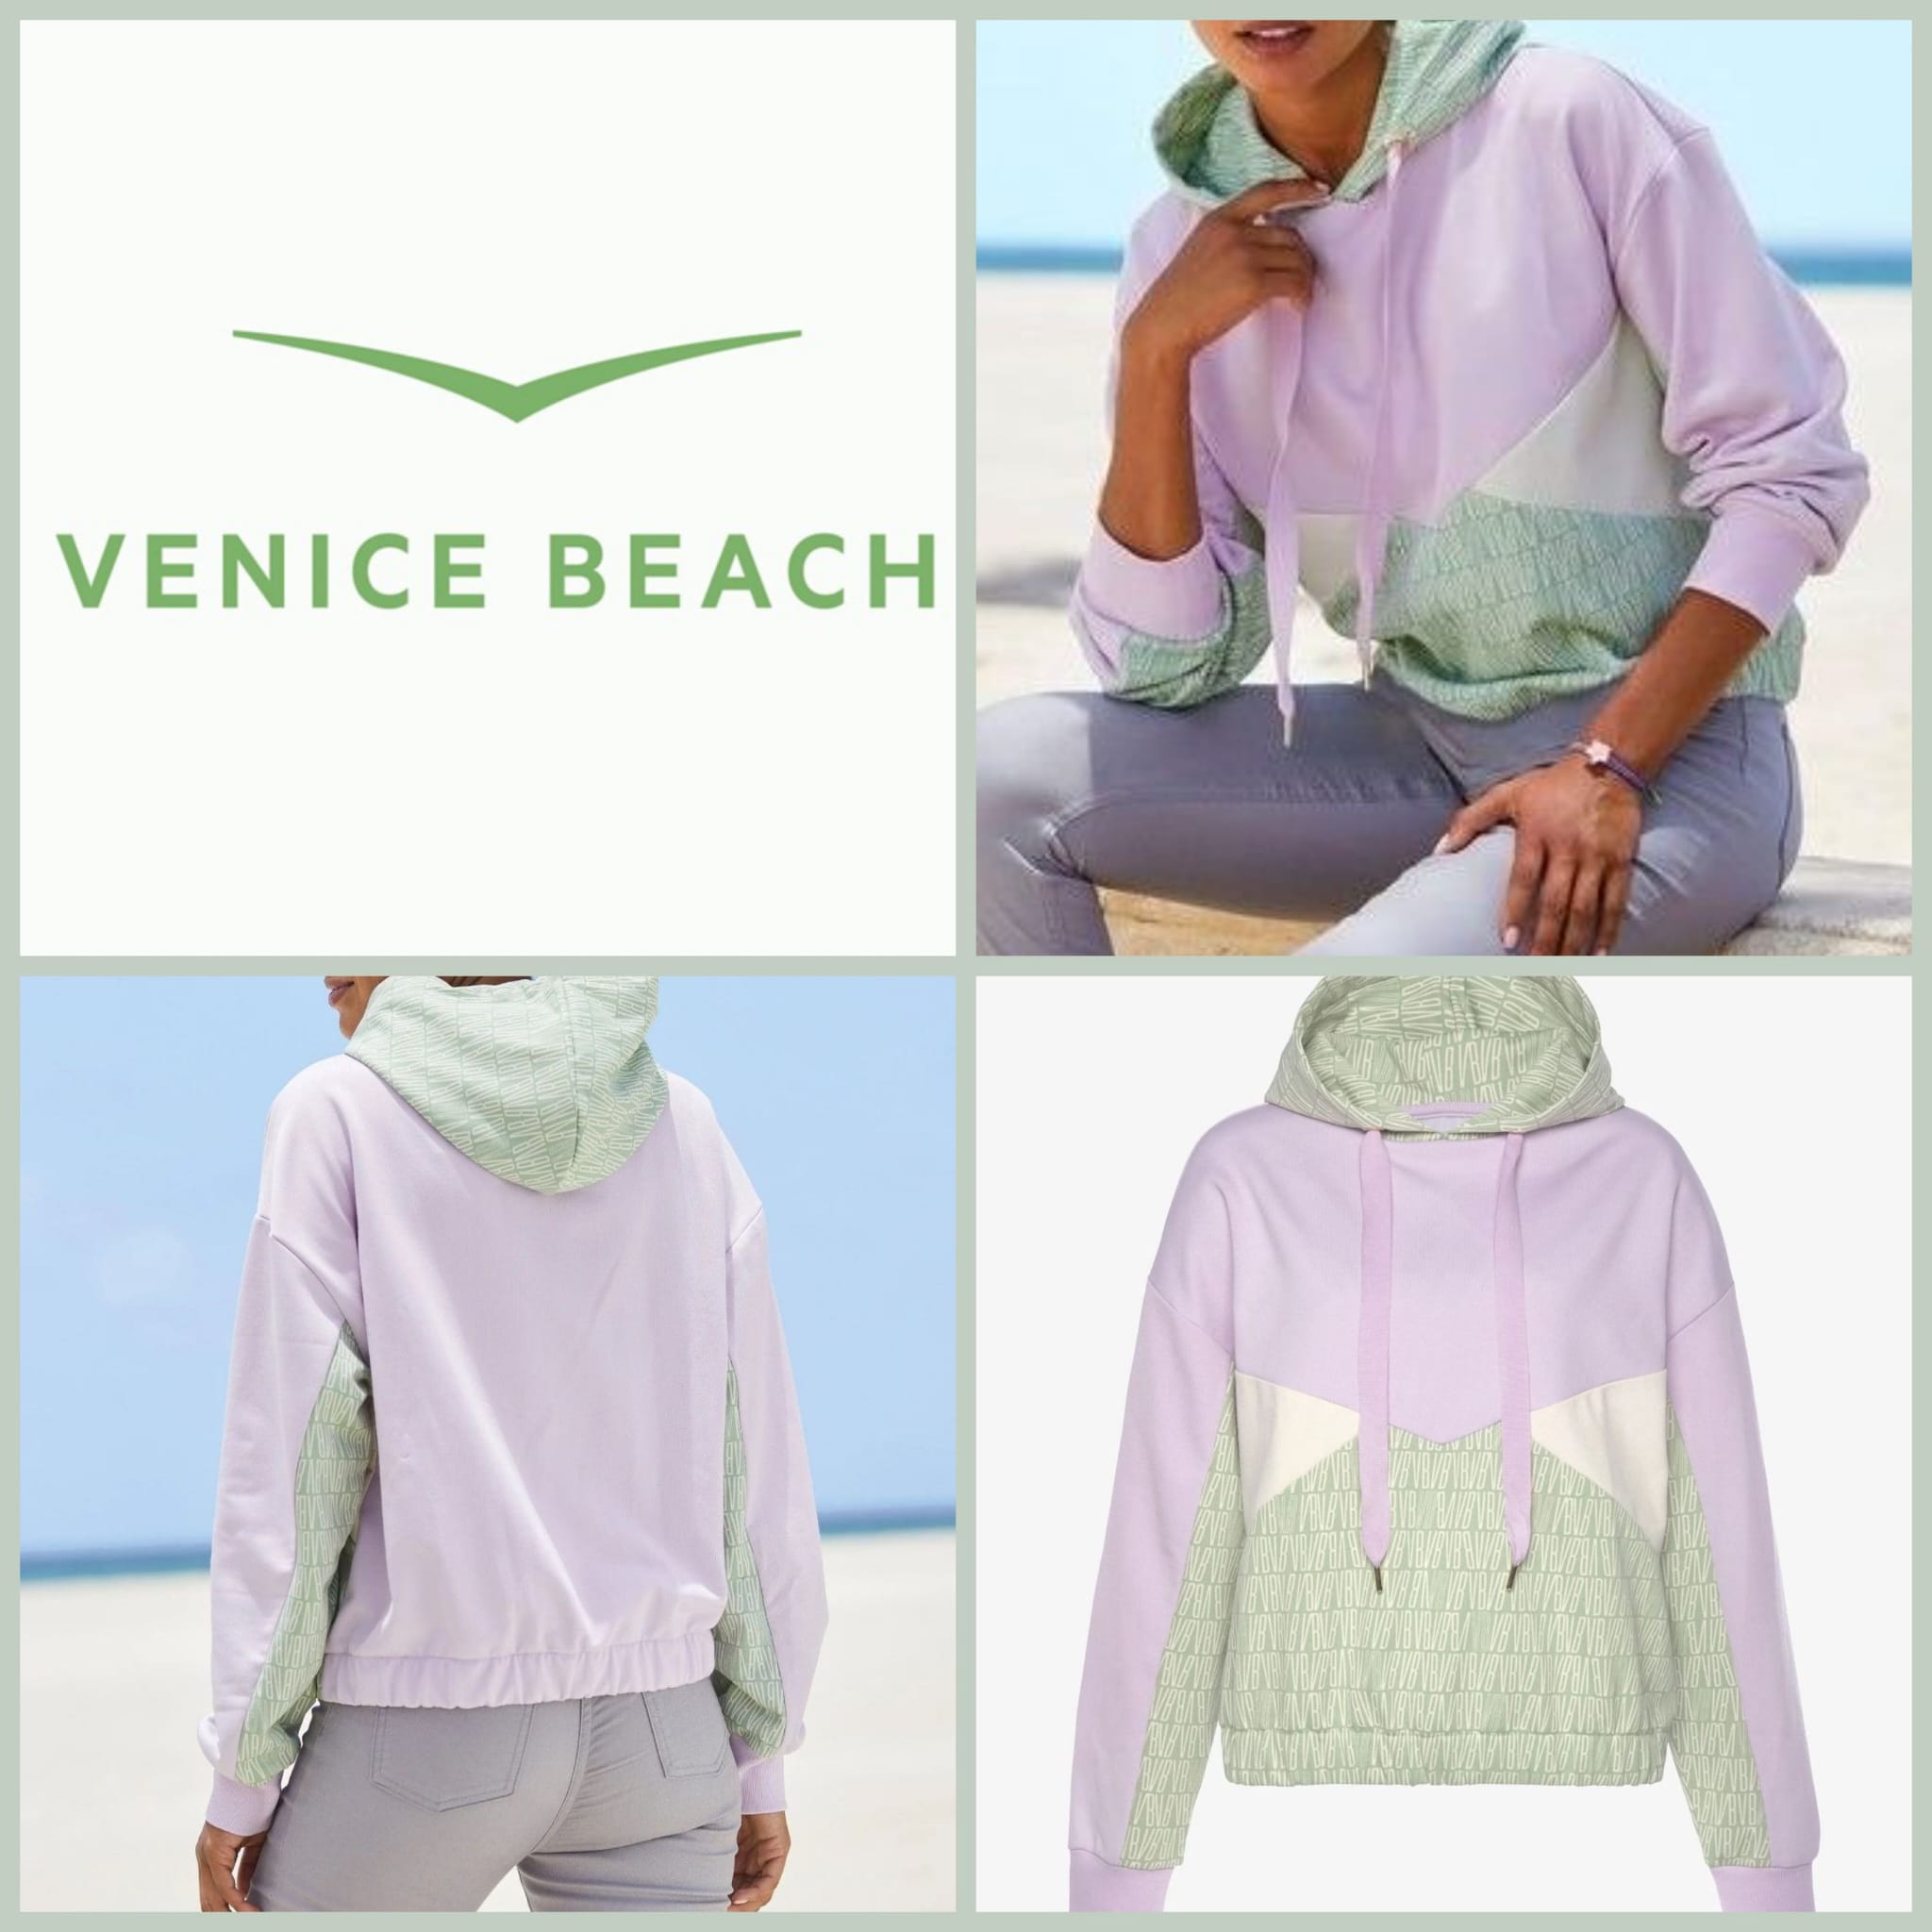 Women's hoodies from Venice Beach